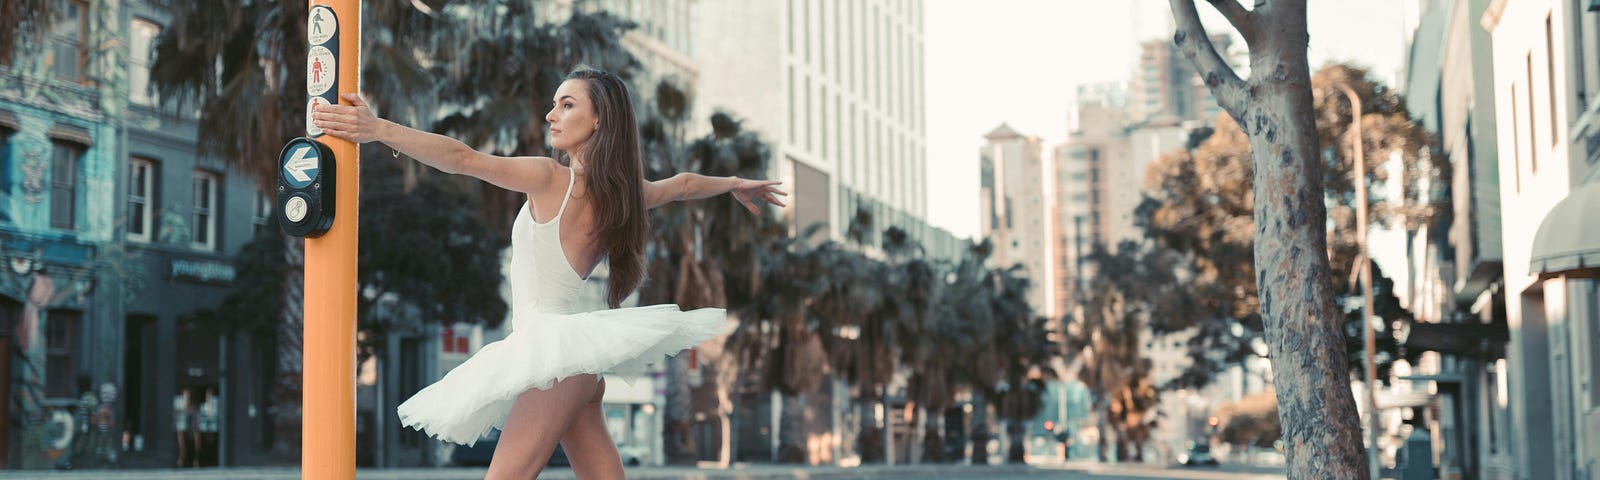 Ballerina posing in the street by a traffic light